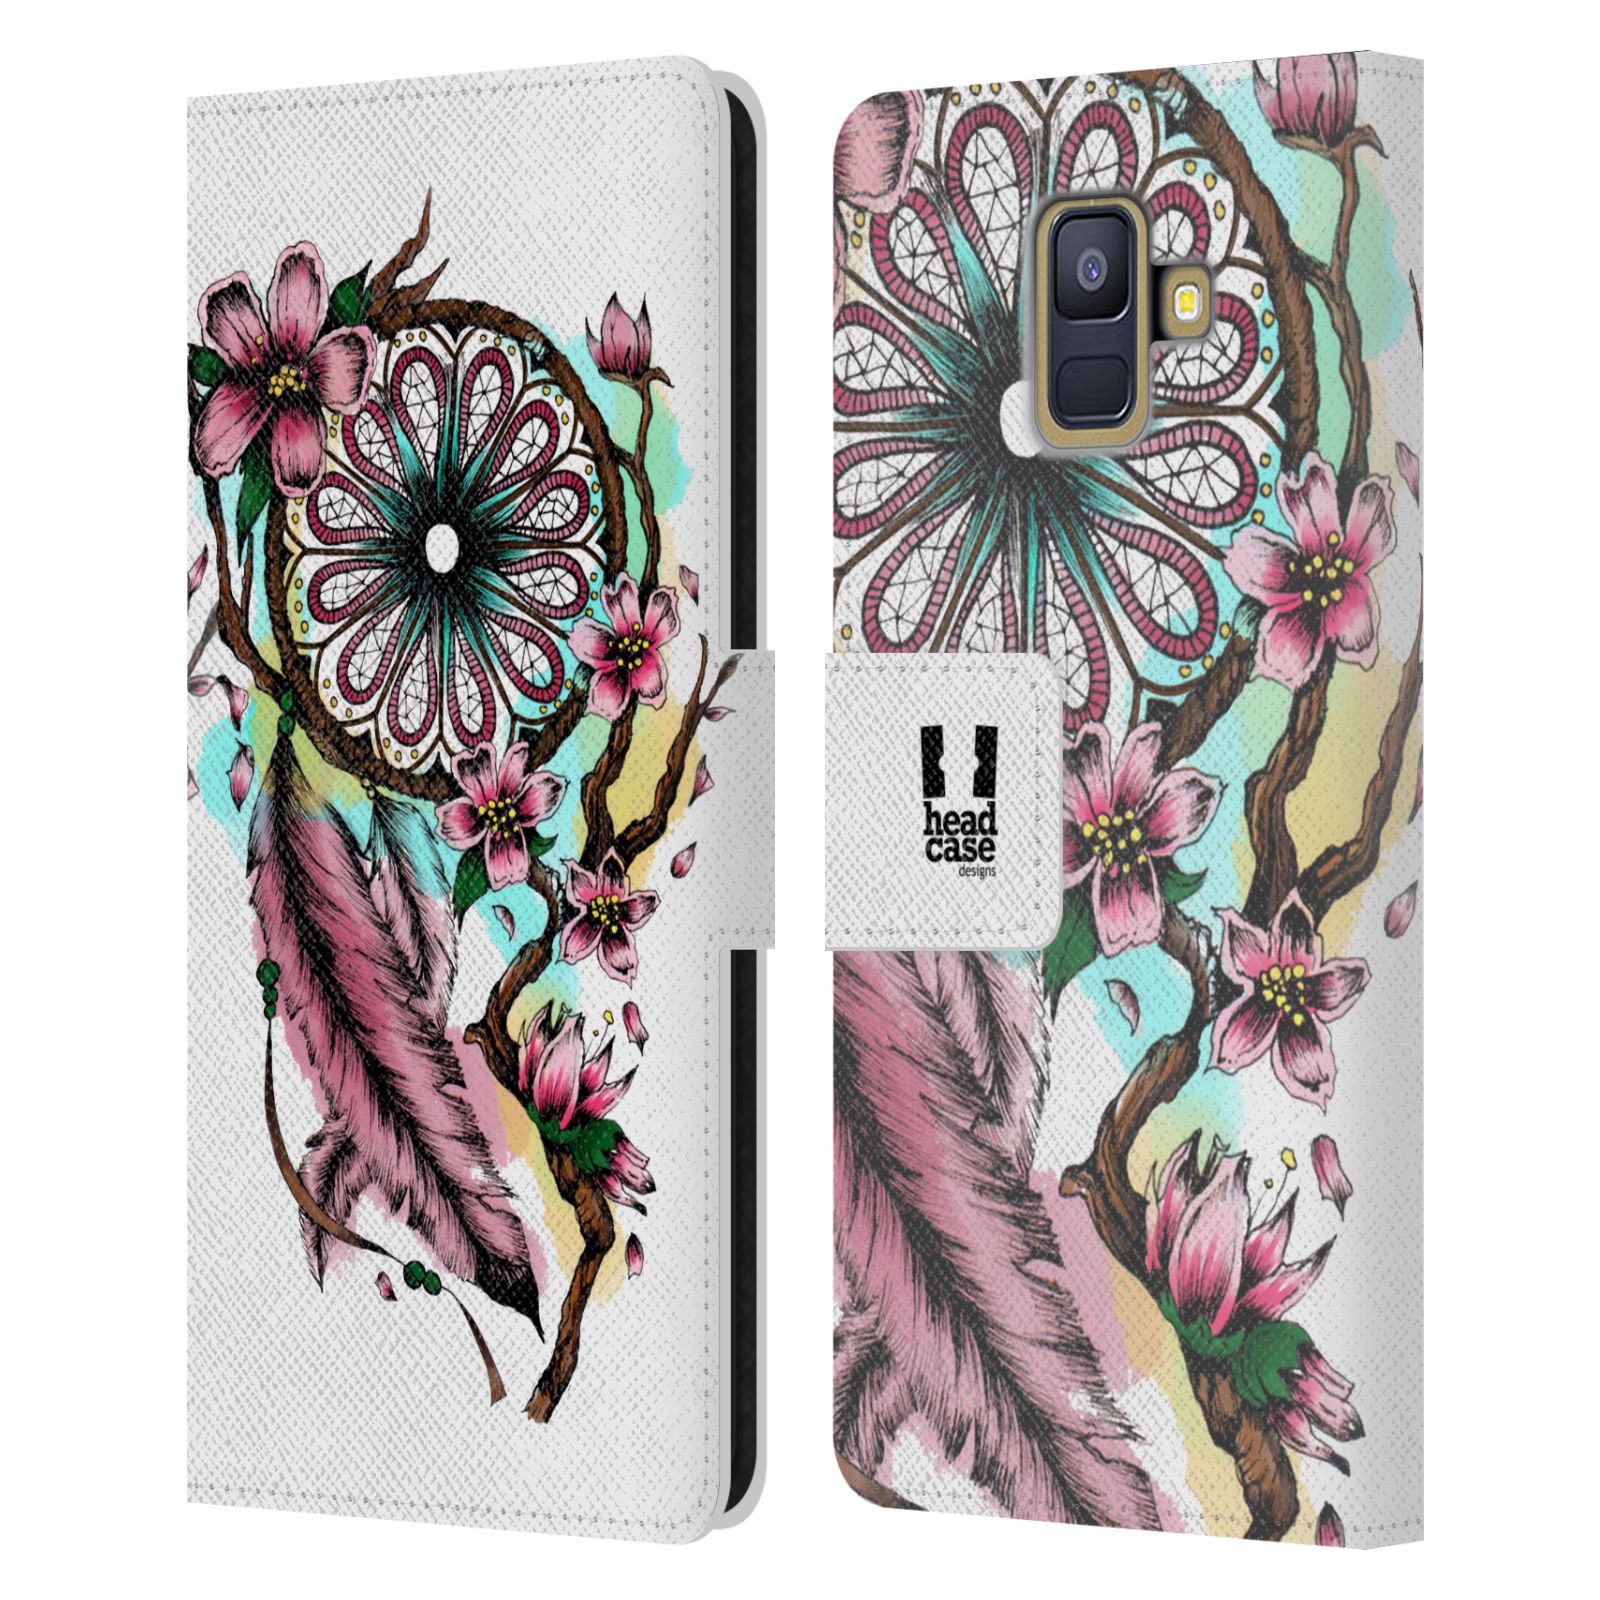 Pouzdro pro mobil Samsung Galaxy A6 2018 - Květinový vzor lapač snů